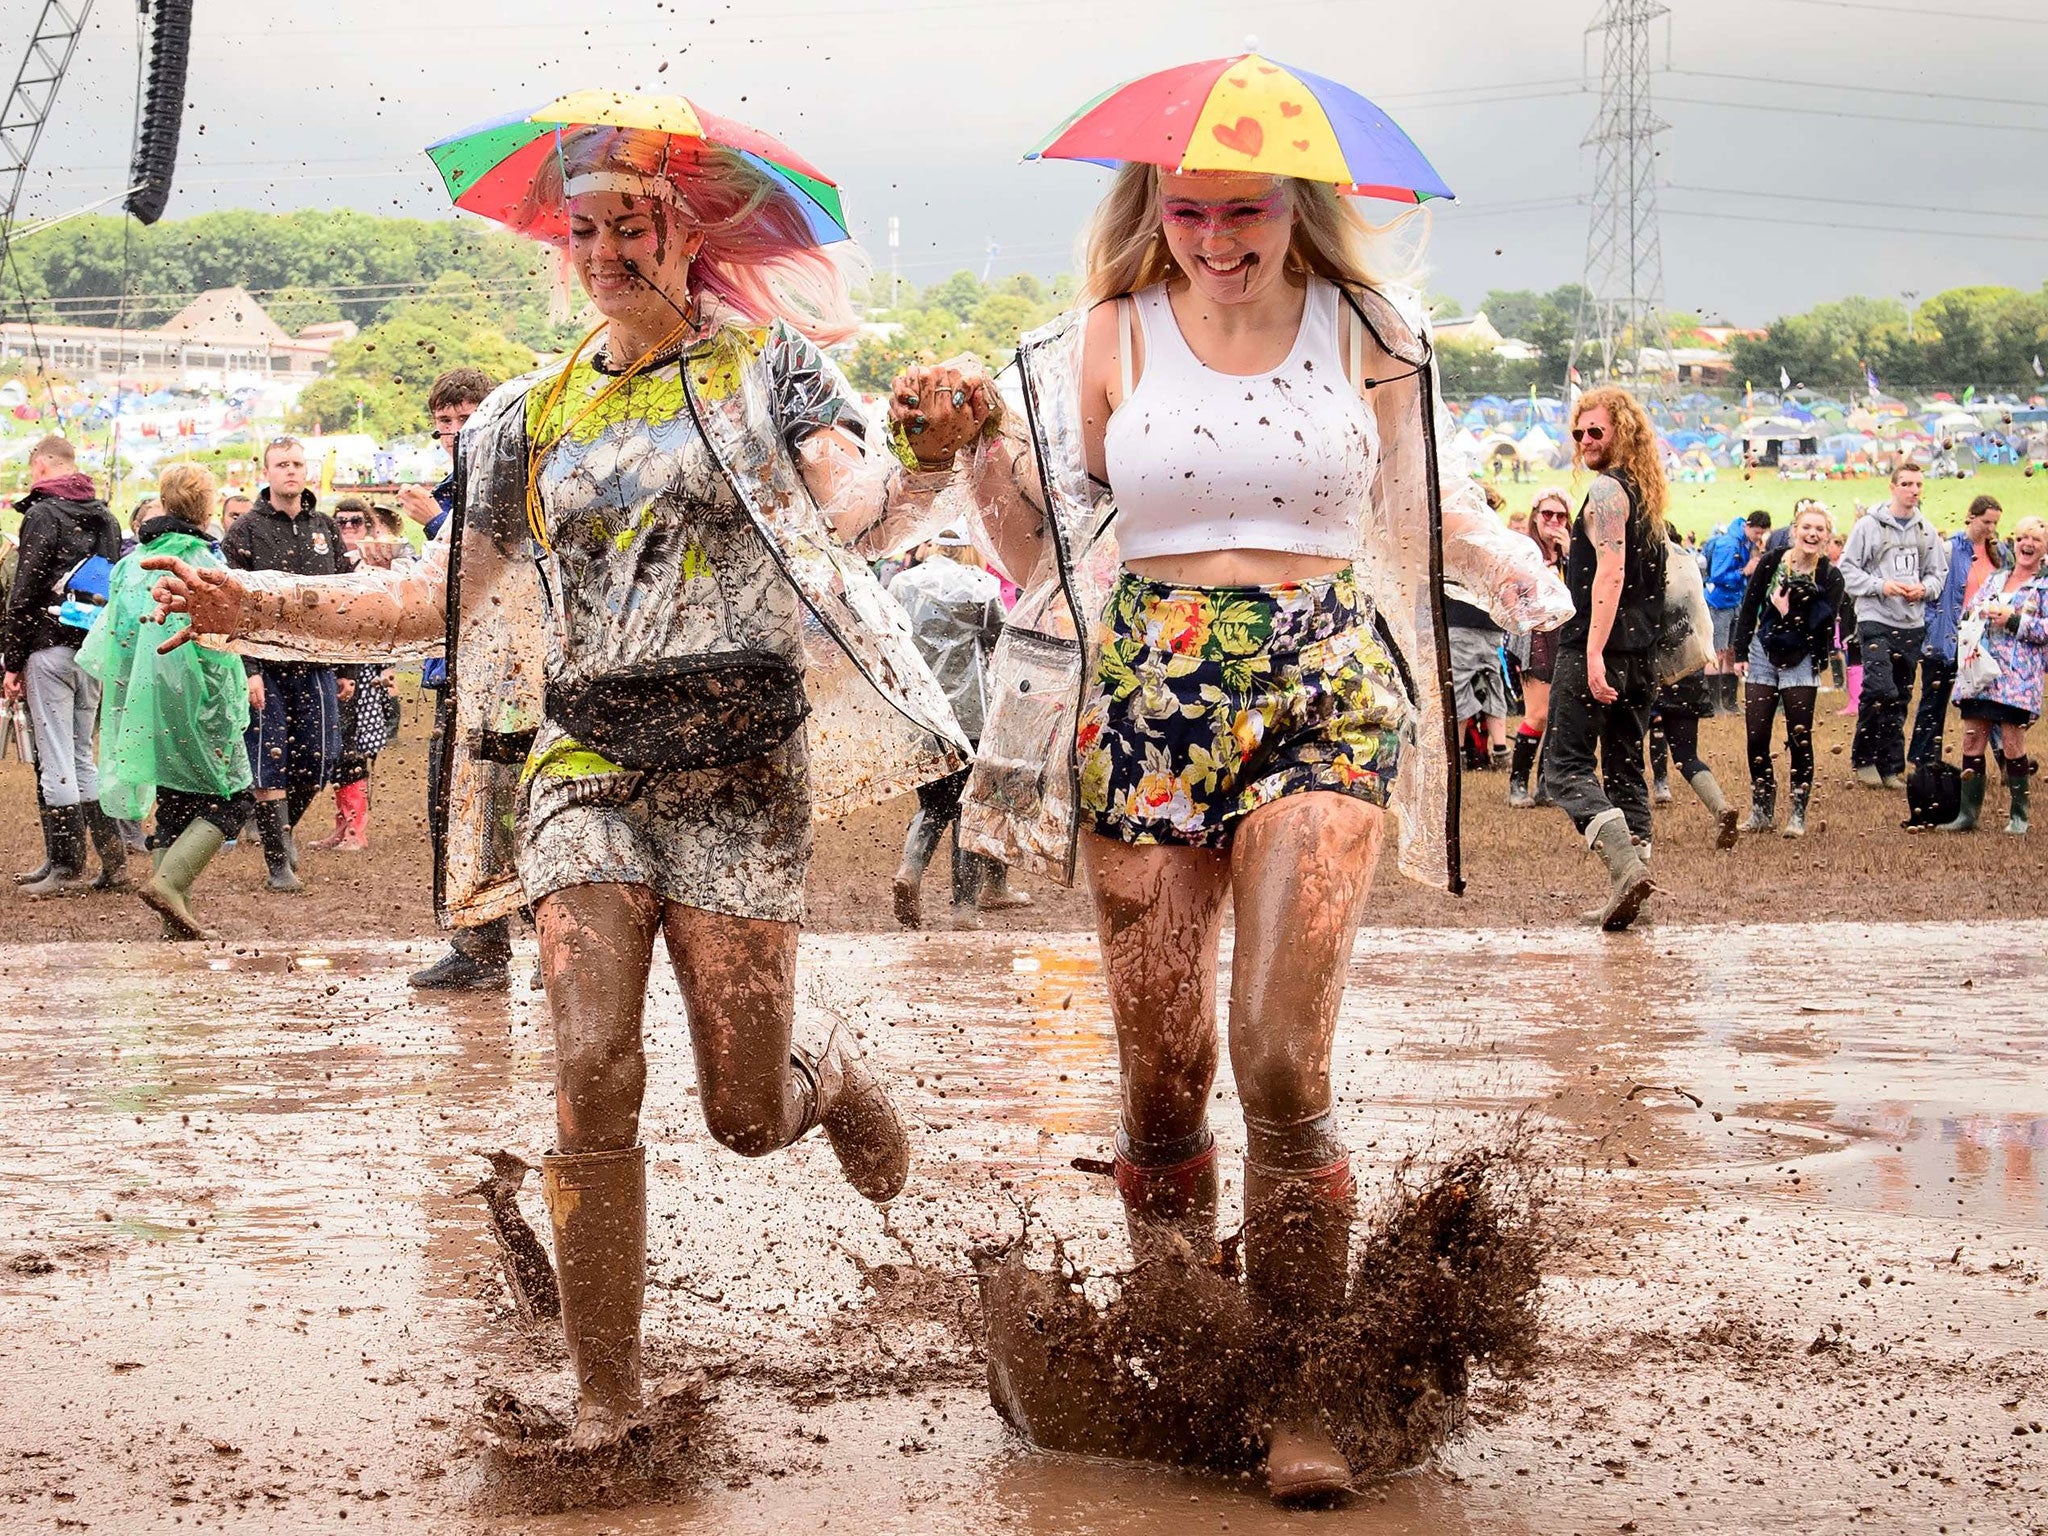 Girls run through a muddy puddle at the Glastonbury Festival